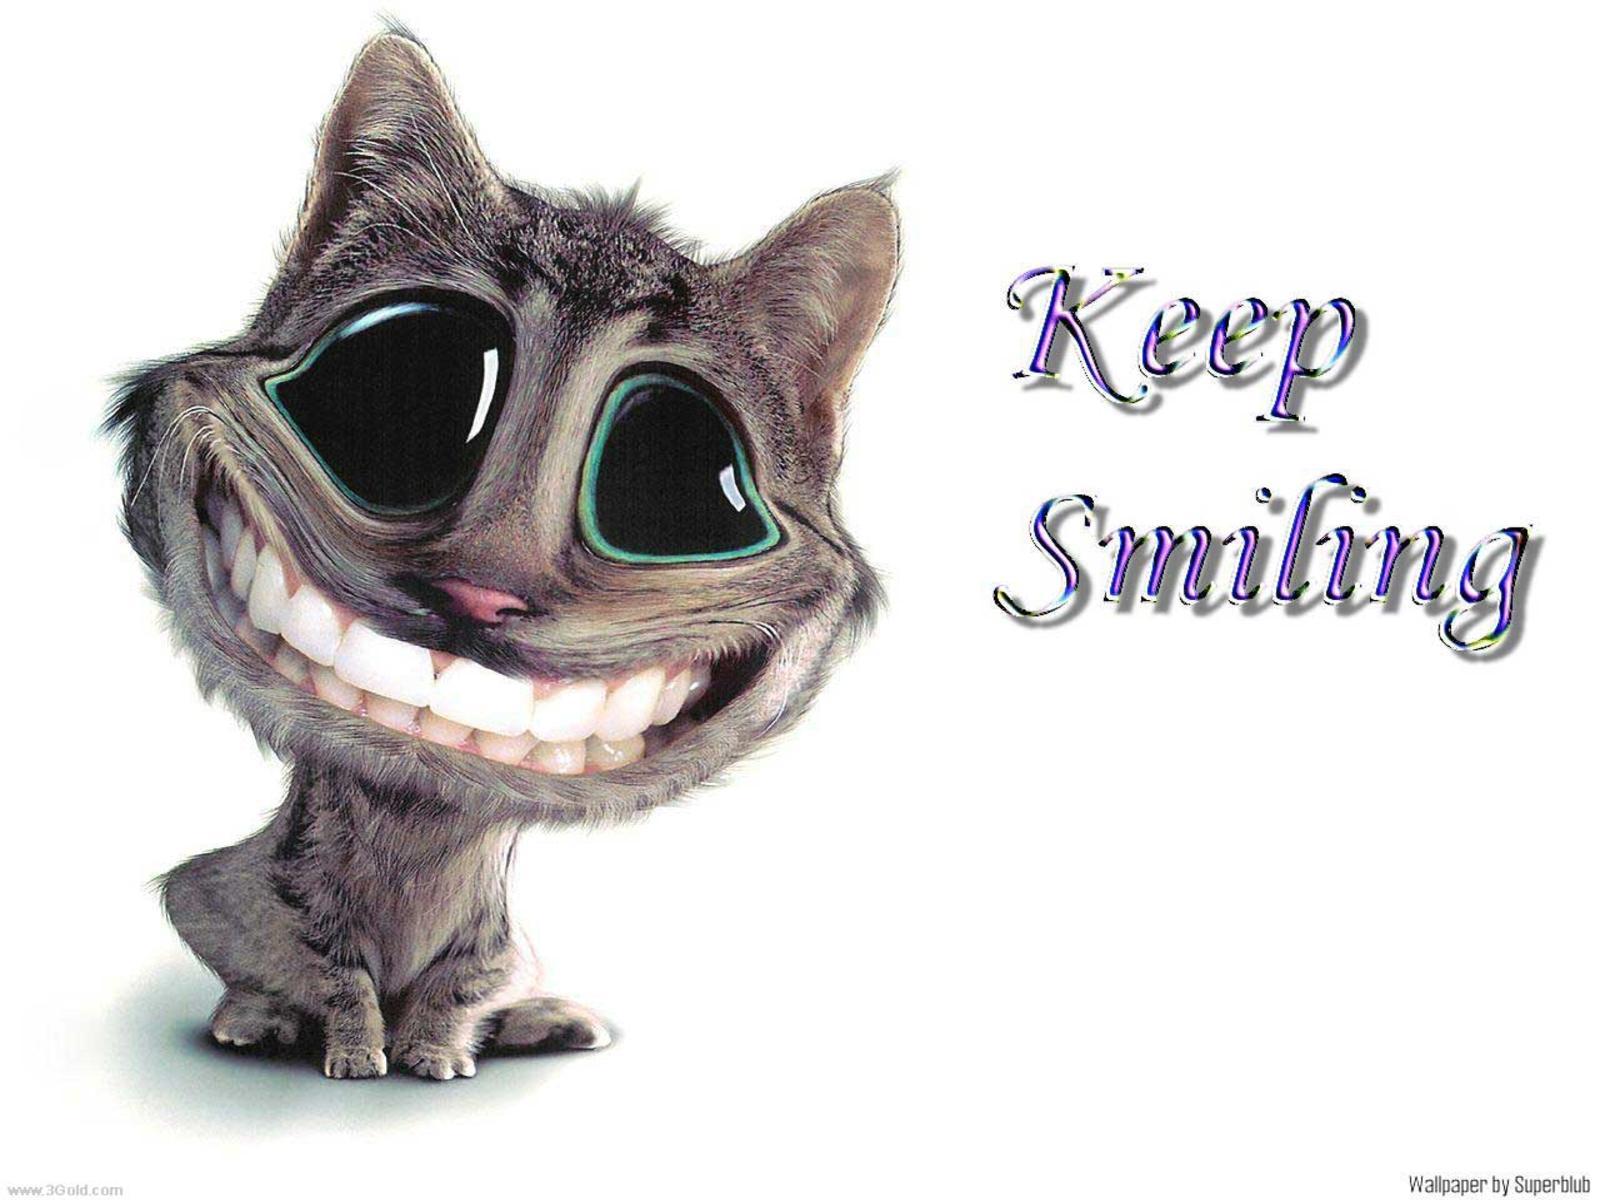 Keep smiling be happy free desktop background - free wallpaper image